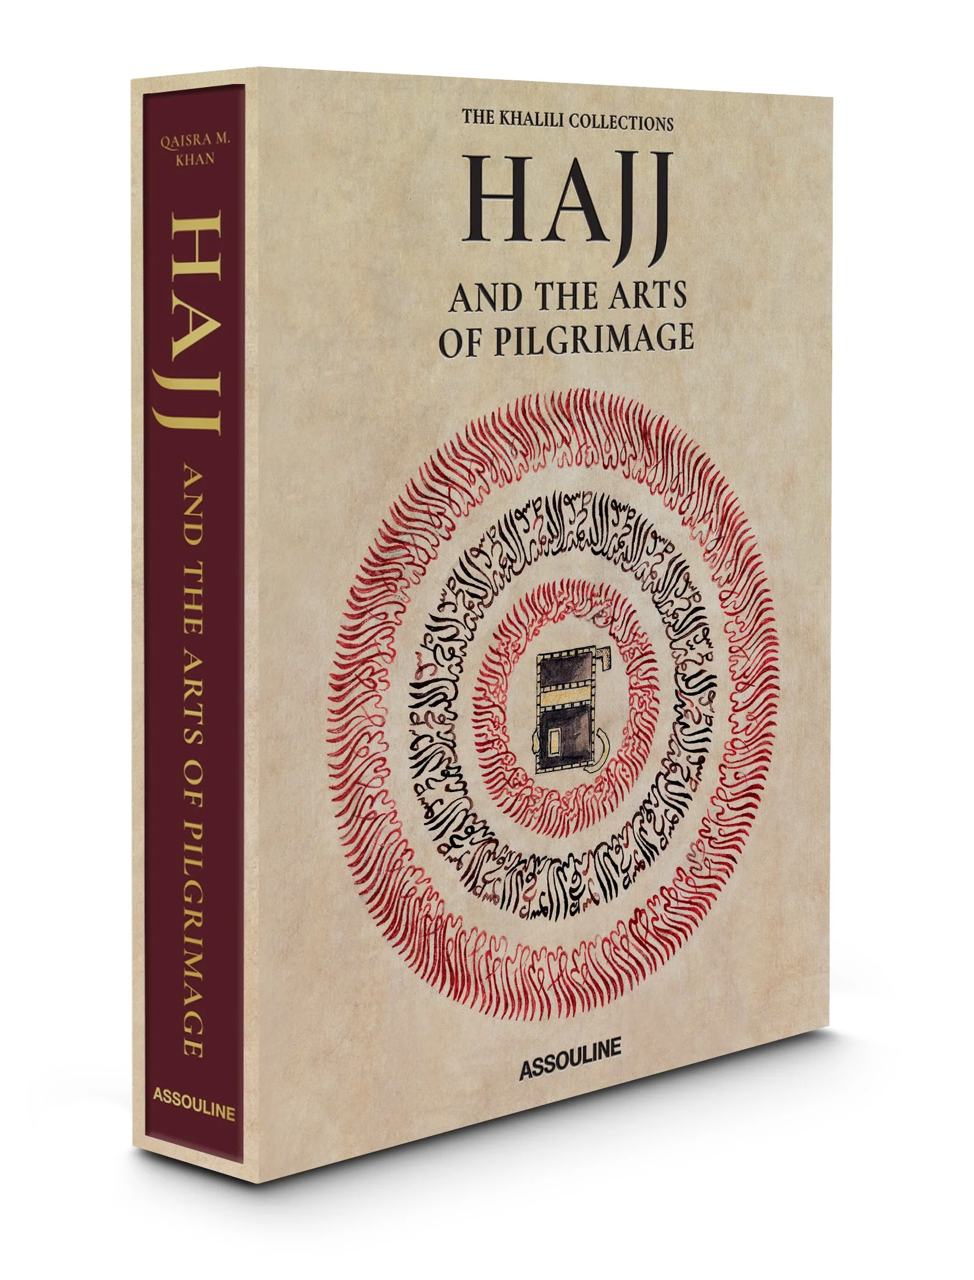 Hajj and the Arts of Pilgrimage by Qaisra M. Khan